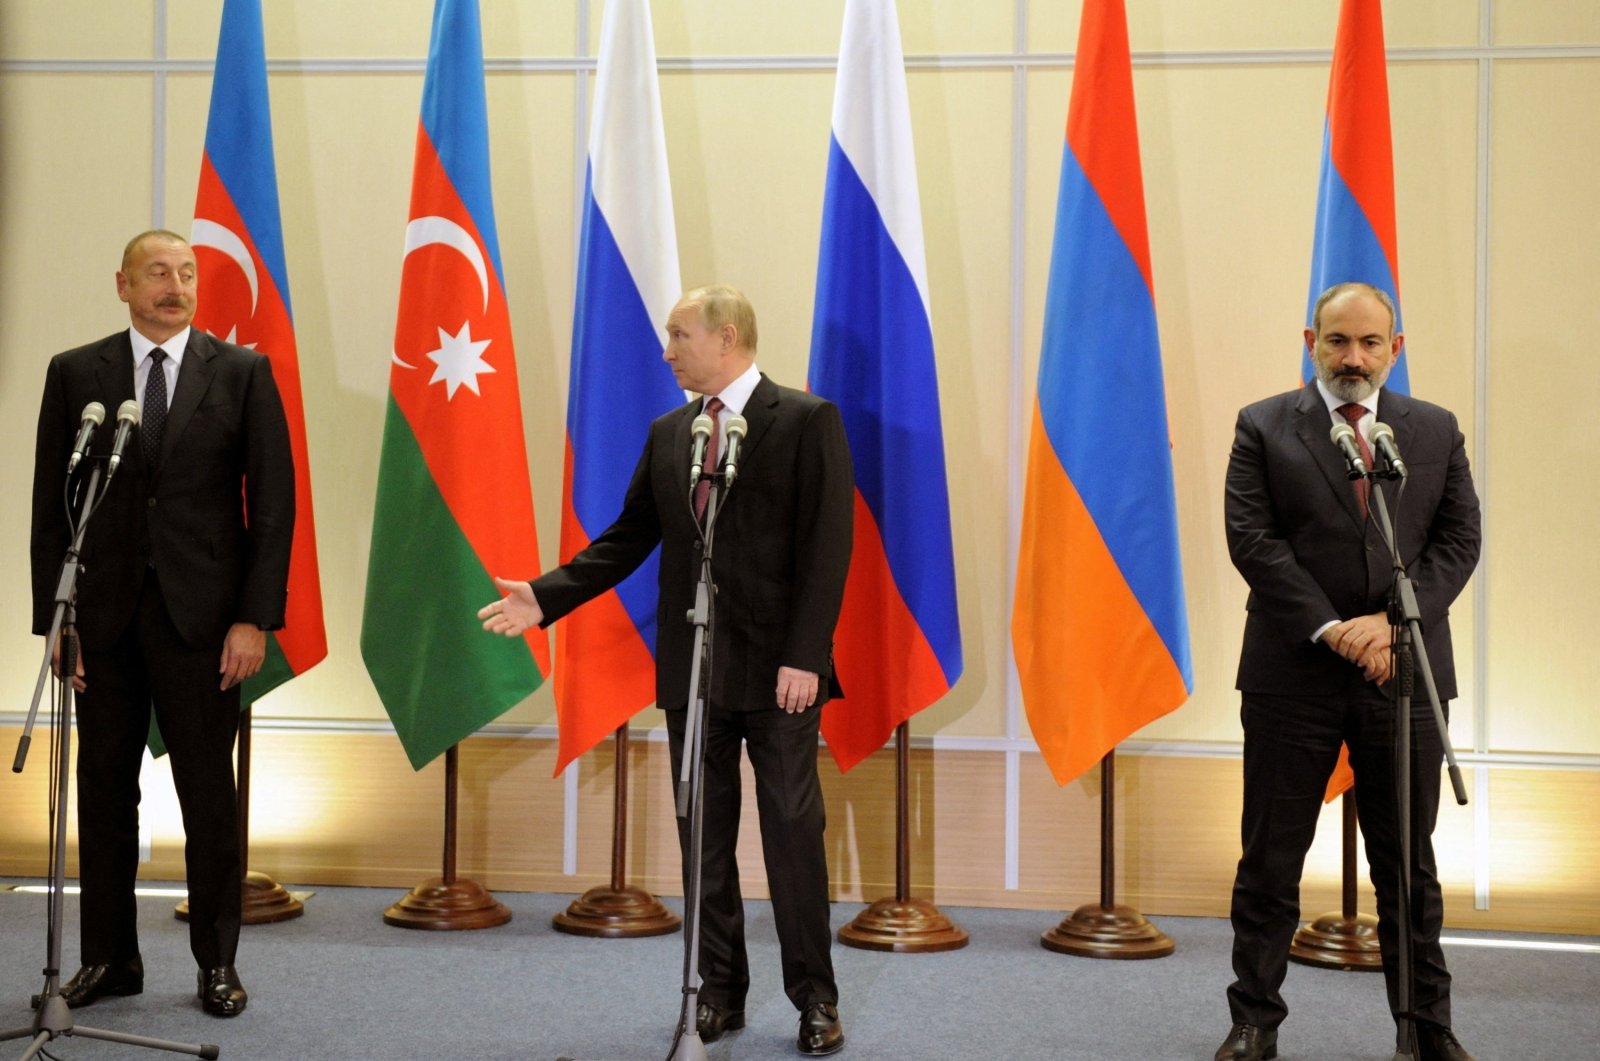 Azerbaijani President Ilham Aliyev (L), Russian President Vladimir Putin (C) and Armenian Prime Minister Nikol Pashinian attend a news conference following their trilateral meeting in Sochi, Russia, Nov. 26, 2021. (Reuters Photo)